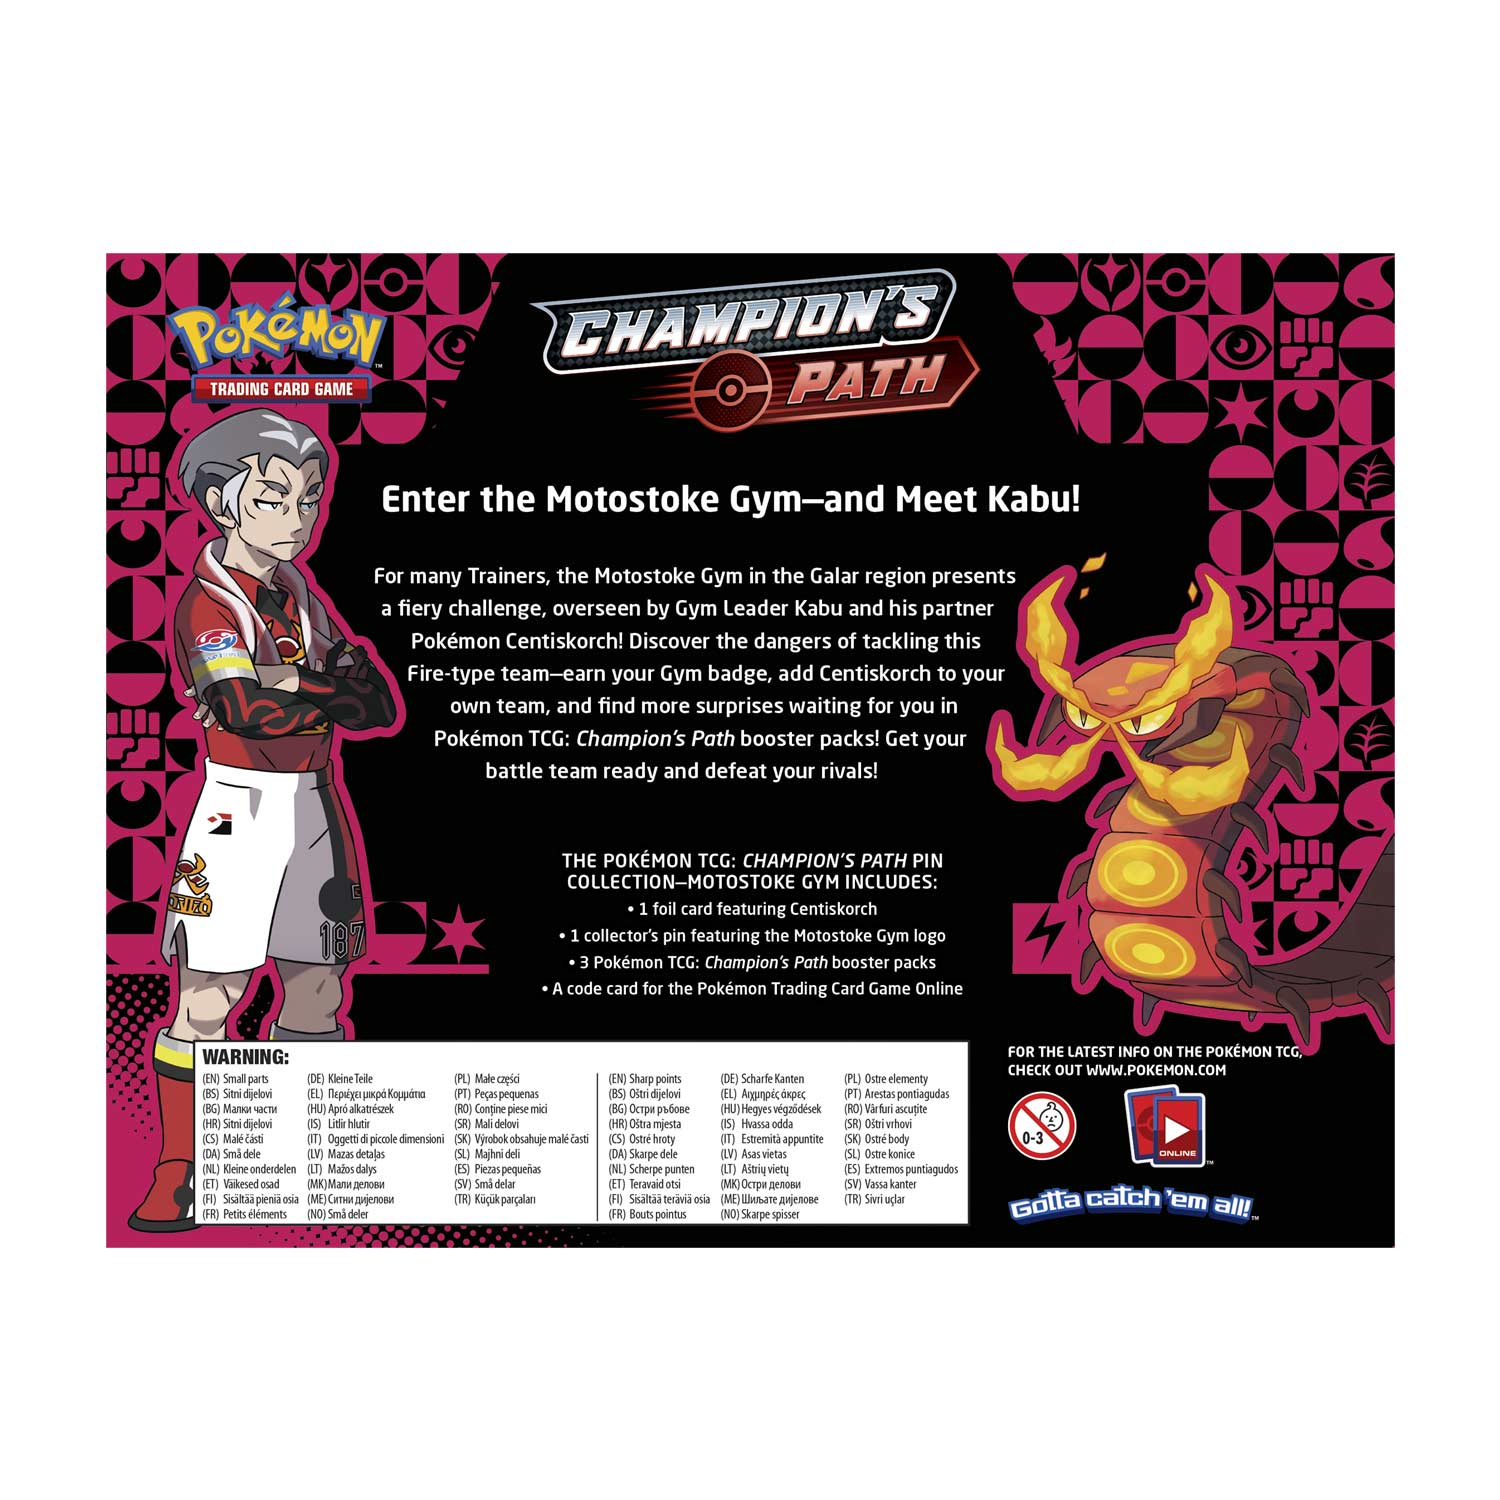 Pokémon TCG: Champion's Path Pin Gym) | Pokémon Center Official Site